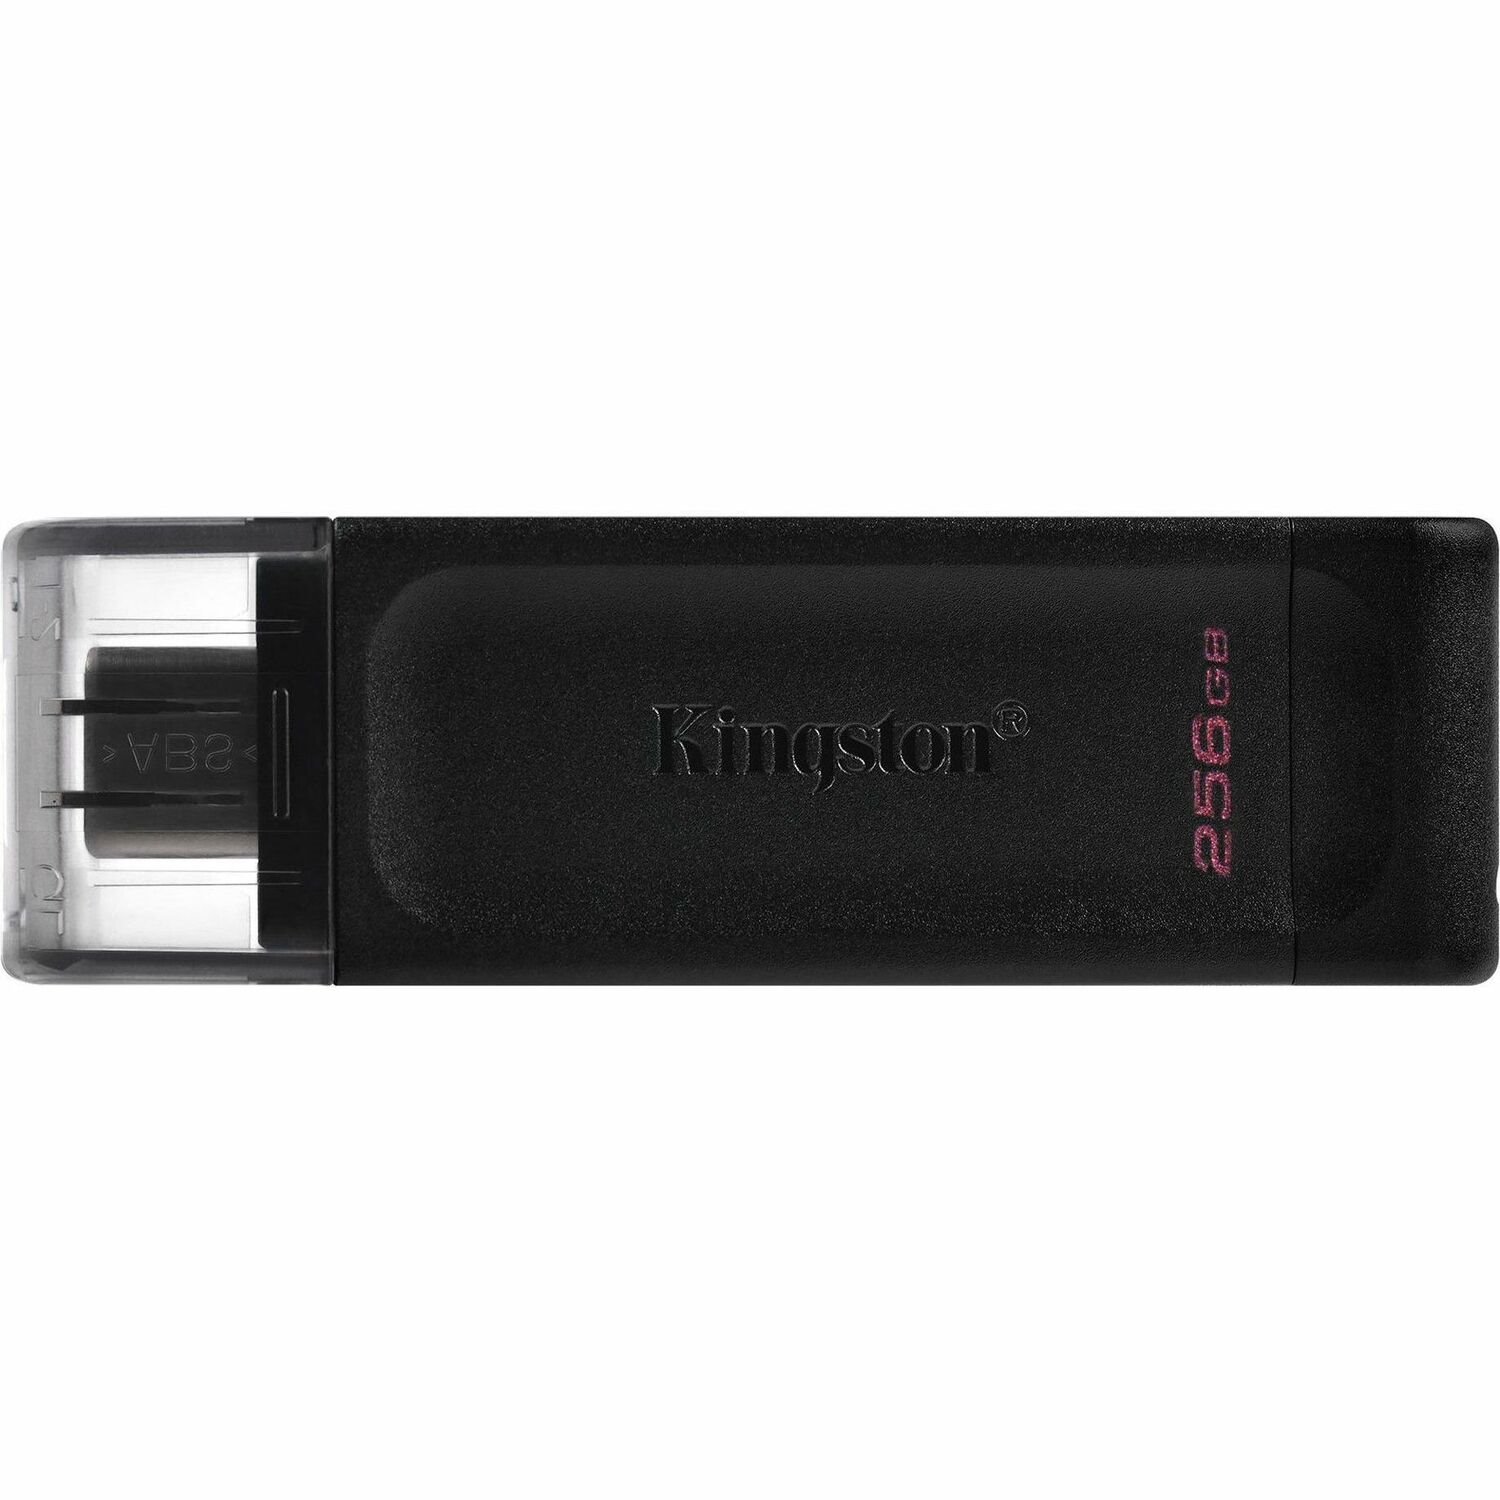 Kingston DataTraveler 70 256GB USB 3.2 (Gen 1) Type C Flash Drive